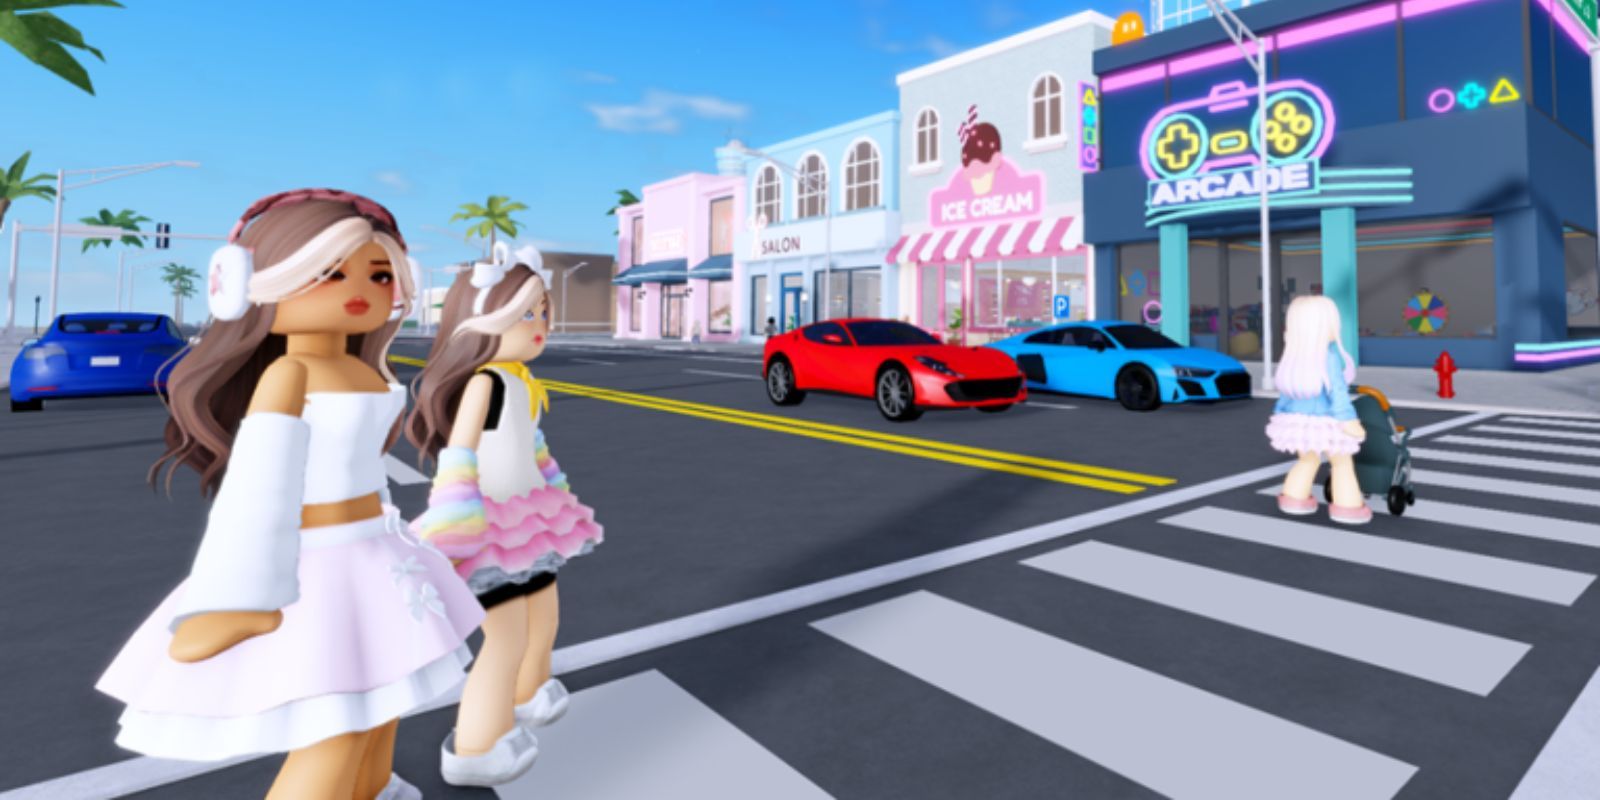 Roblox Seaside RP characters crossing a street